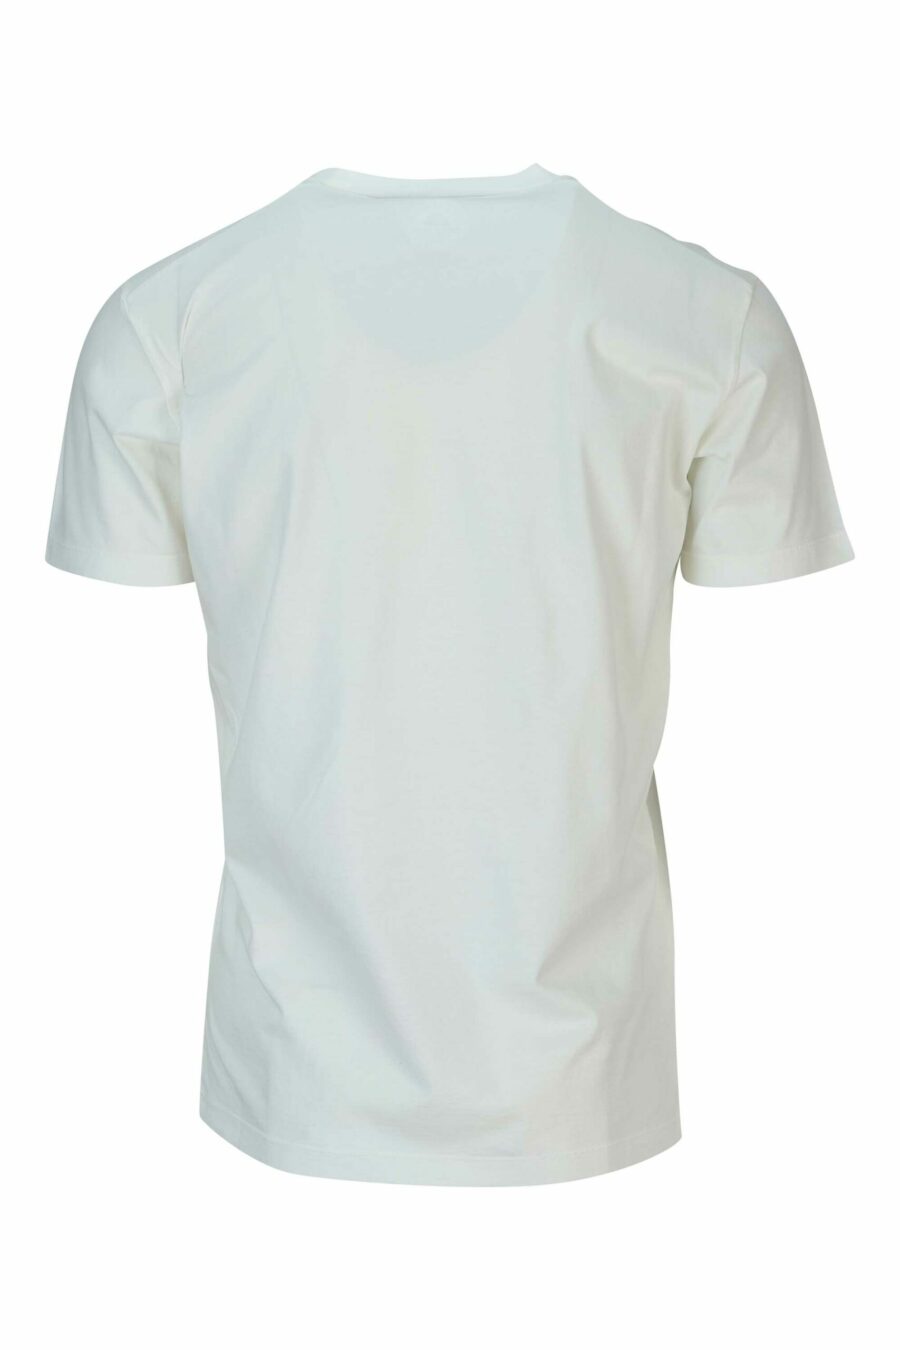 T-shirt blanc avec maxilogo "vip" - 8054148578855 1 scaled